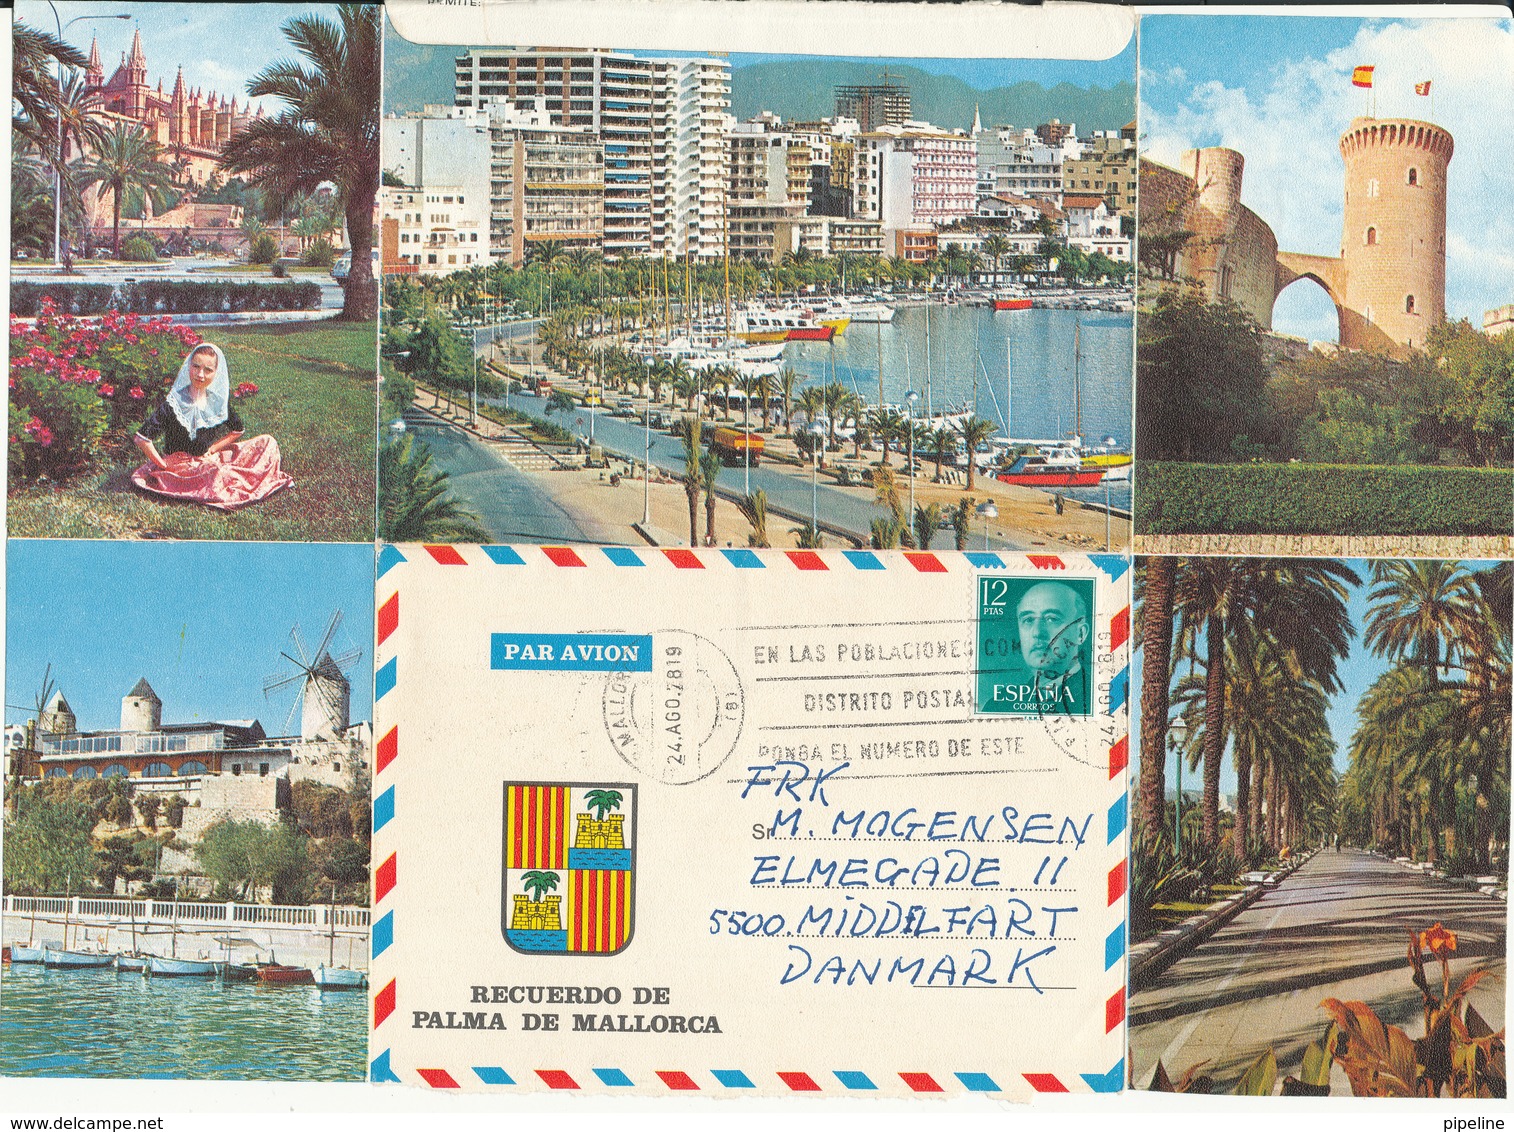 Spain Photoletter Sent To Denmark Recuerdo De Palma De Mallorca 24-8-1978 - Lettres & Documents